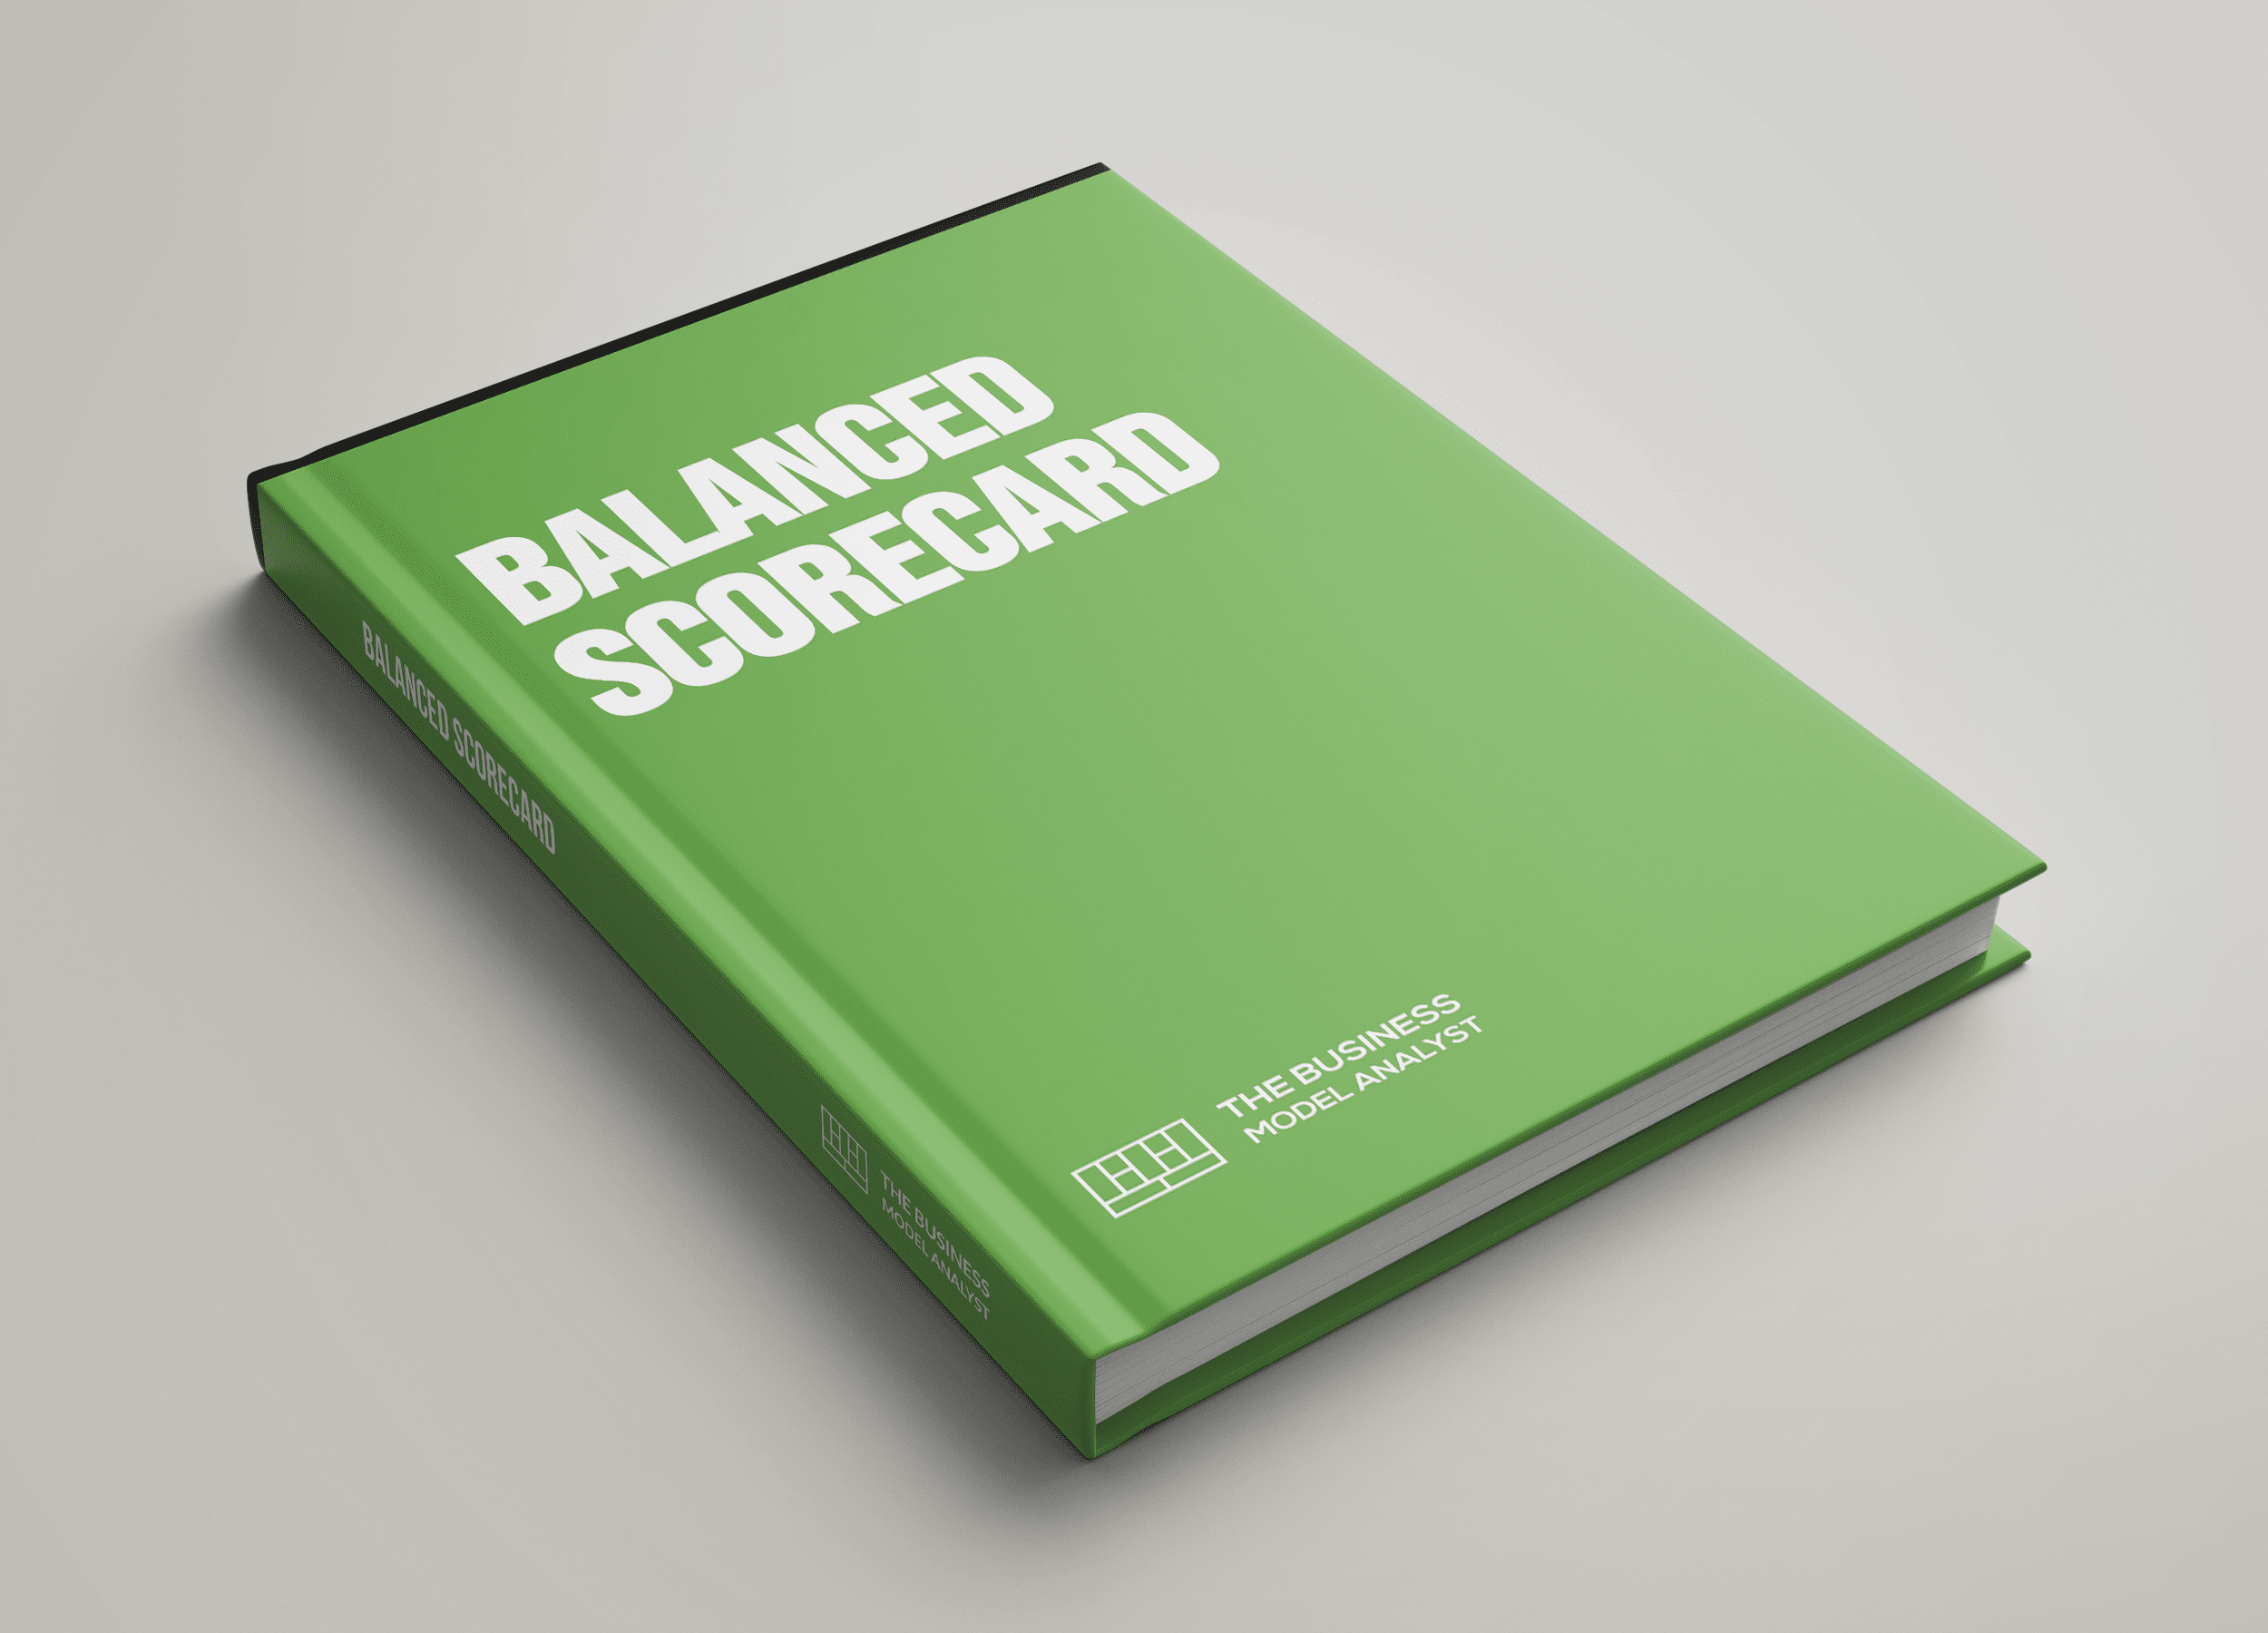 Balanced Scorecard Cover